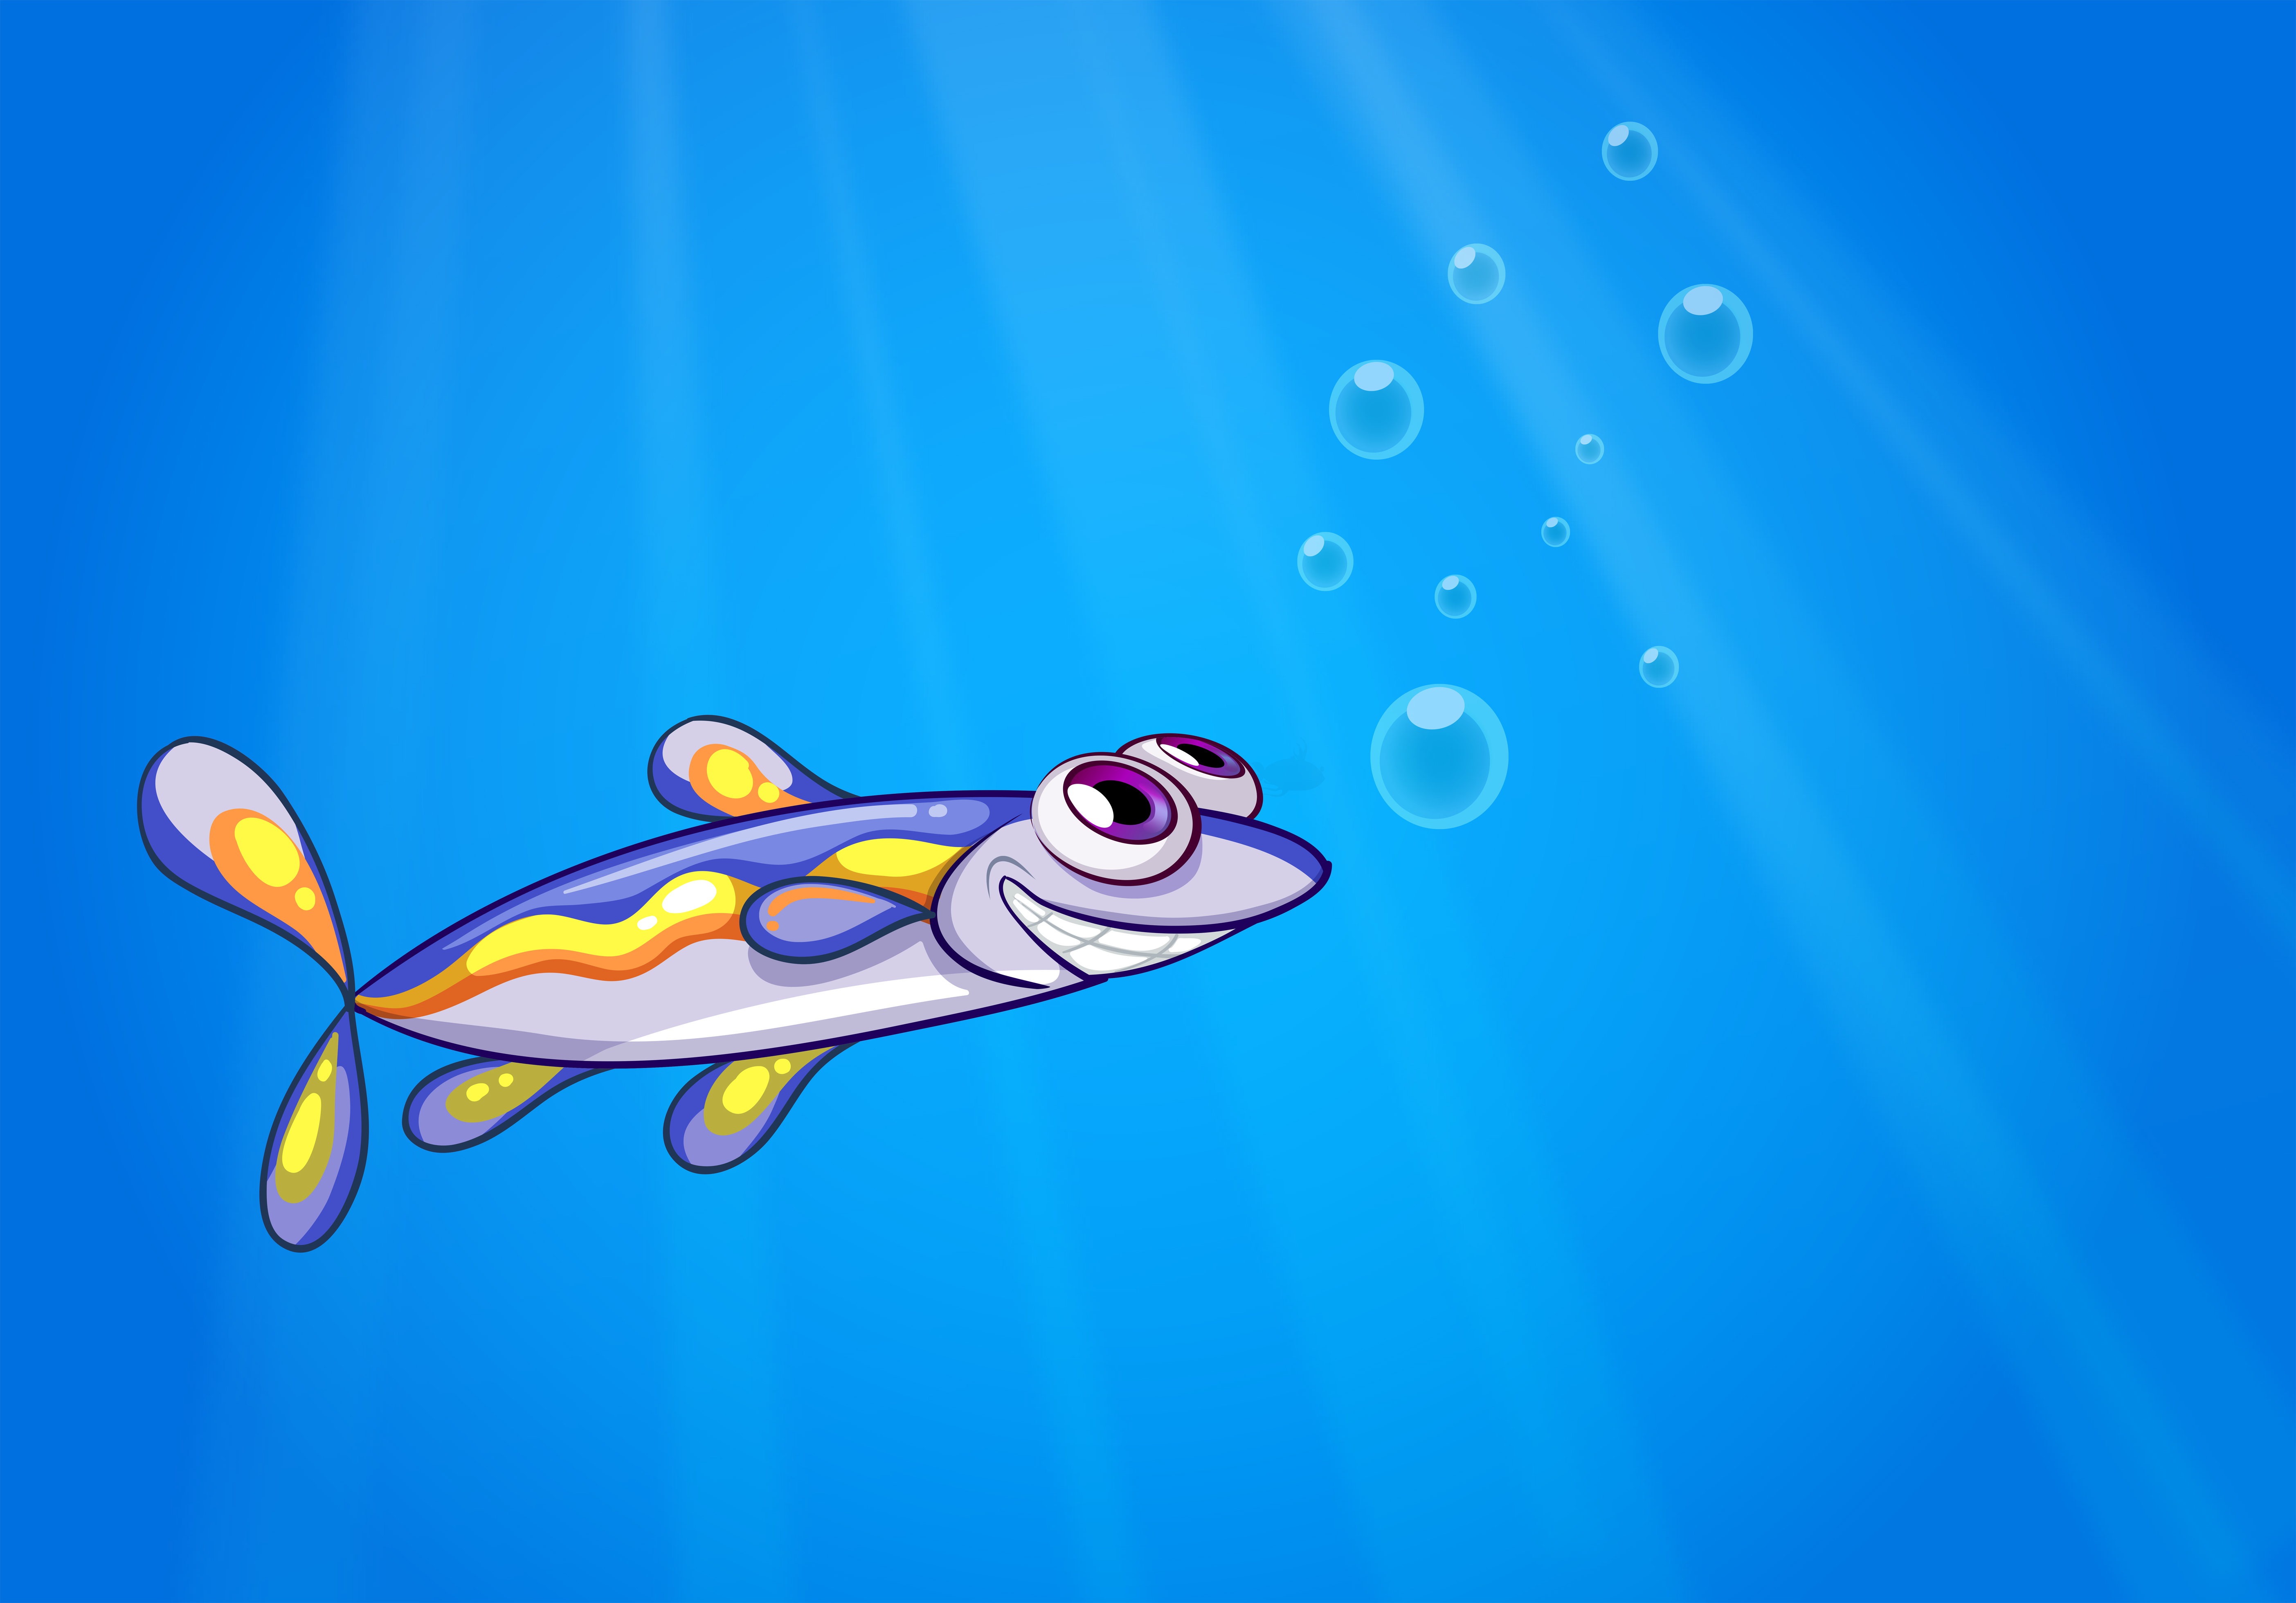 Download A fish under the sea - Download Free Vectors, Clipart ...